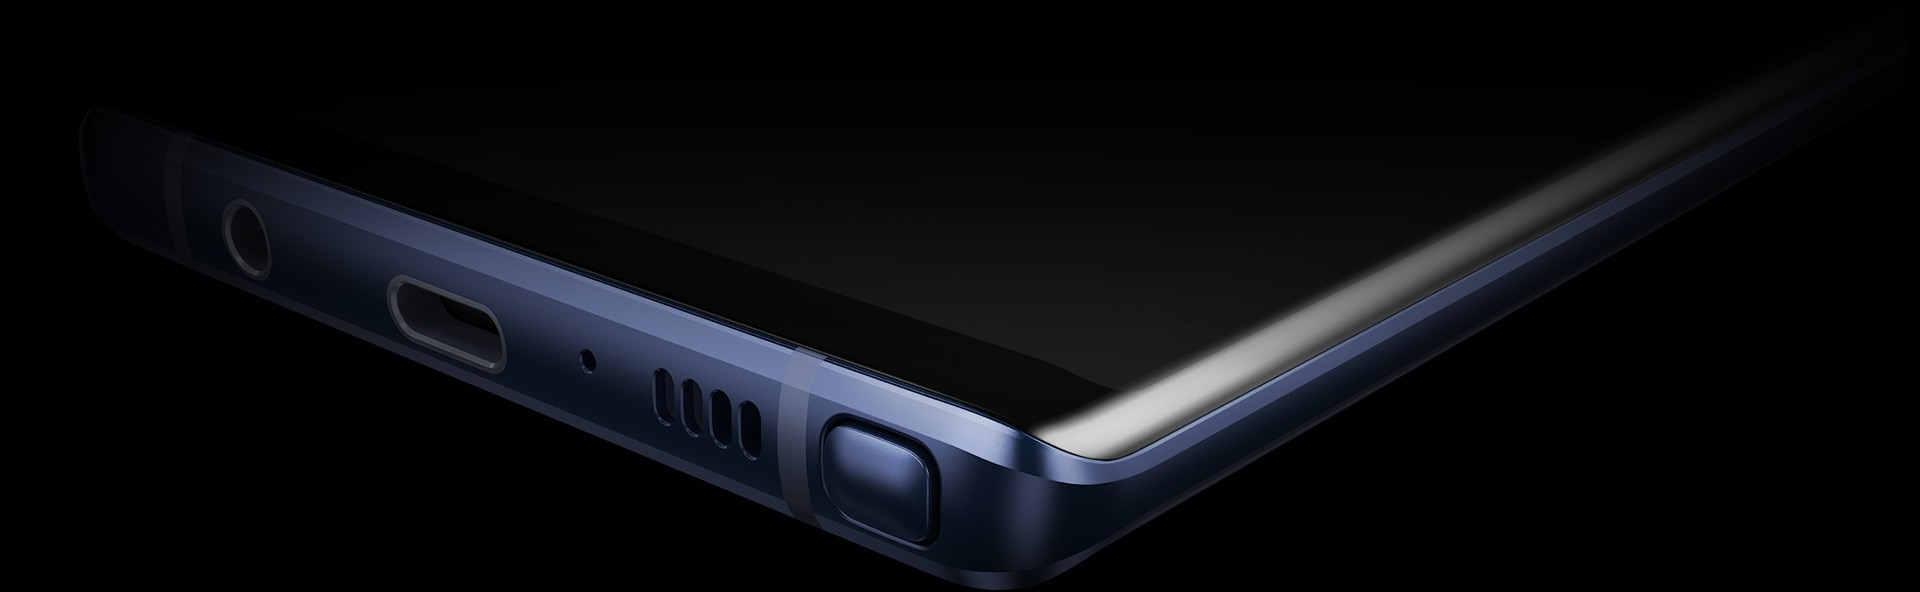 Veliki krupni plan Galaxy Note9 s donje desne strane koji pokazuje beskrajni zaslon